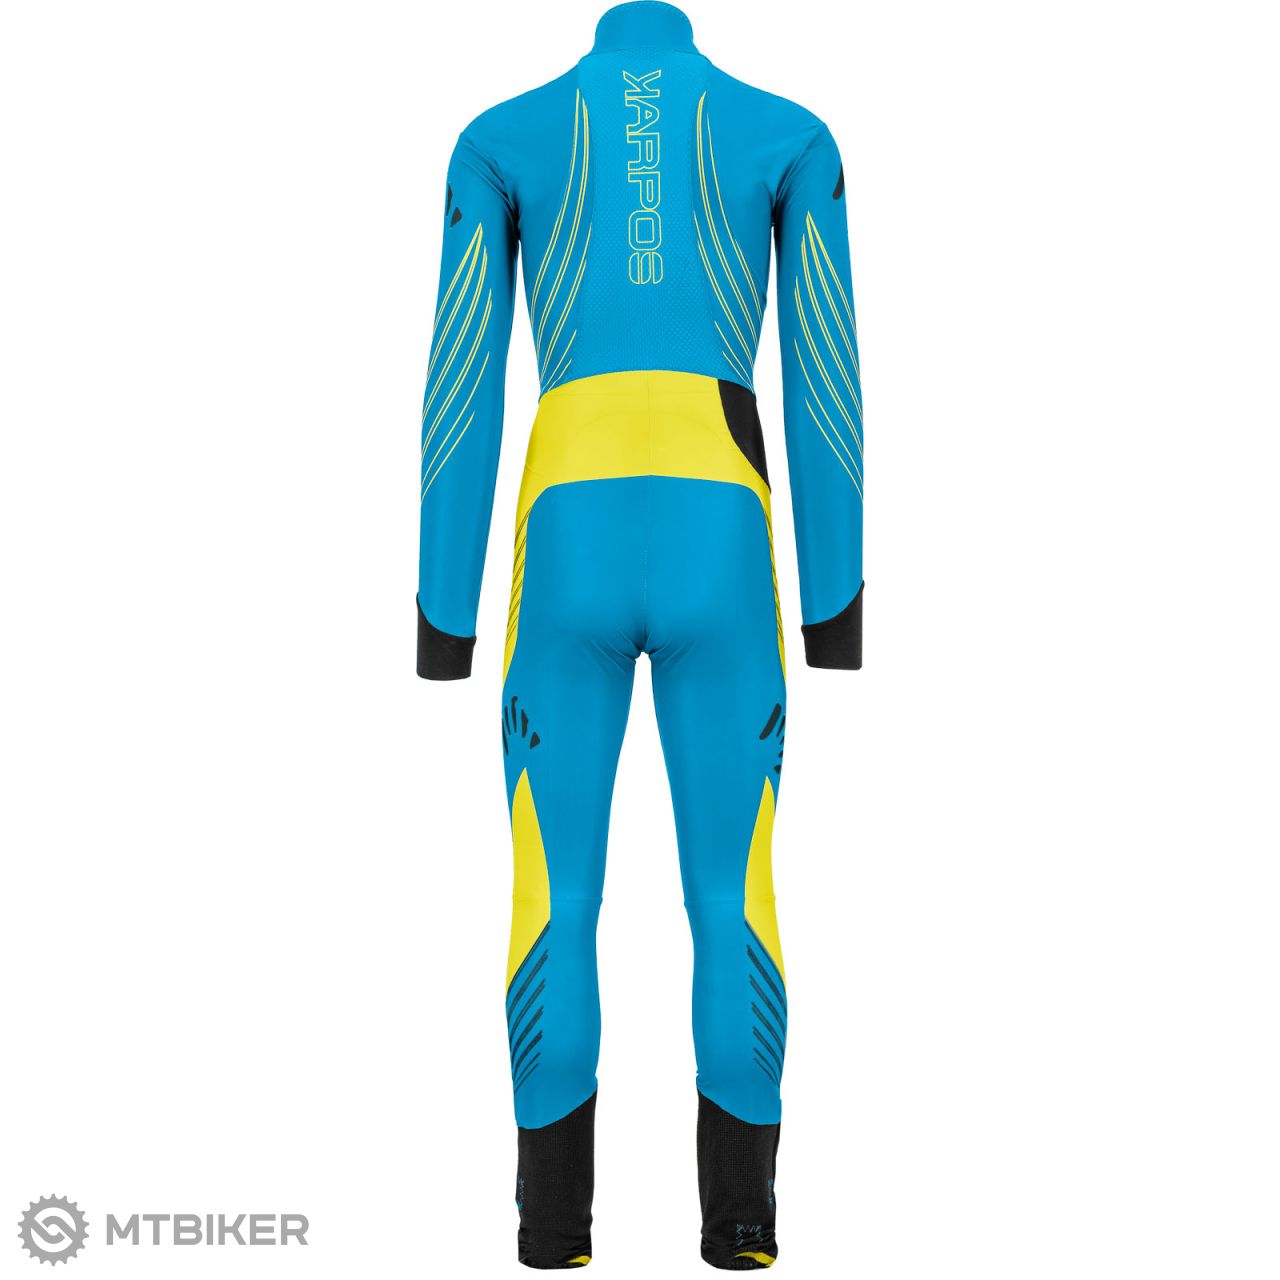 Karpos RACE suit, blue/yellow - MTBIKER.shop